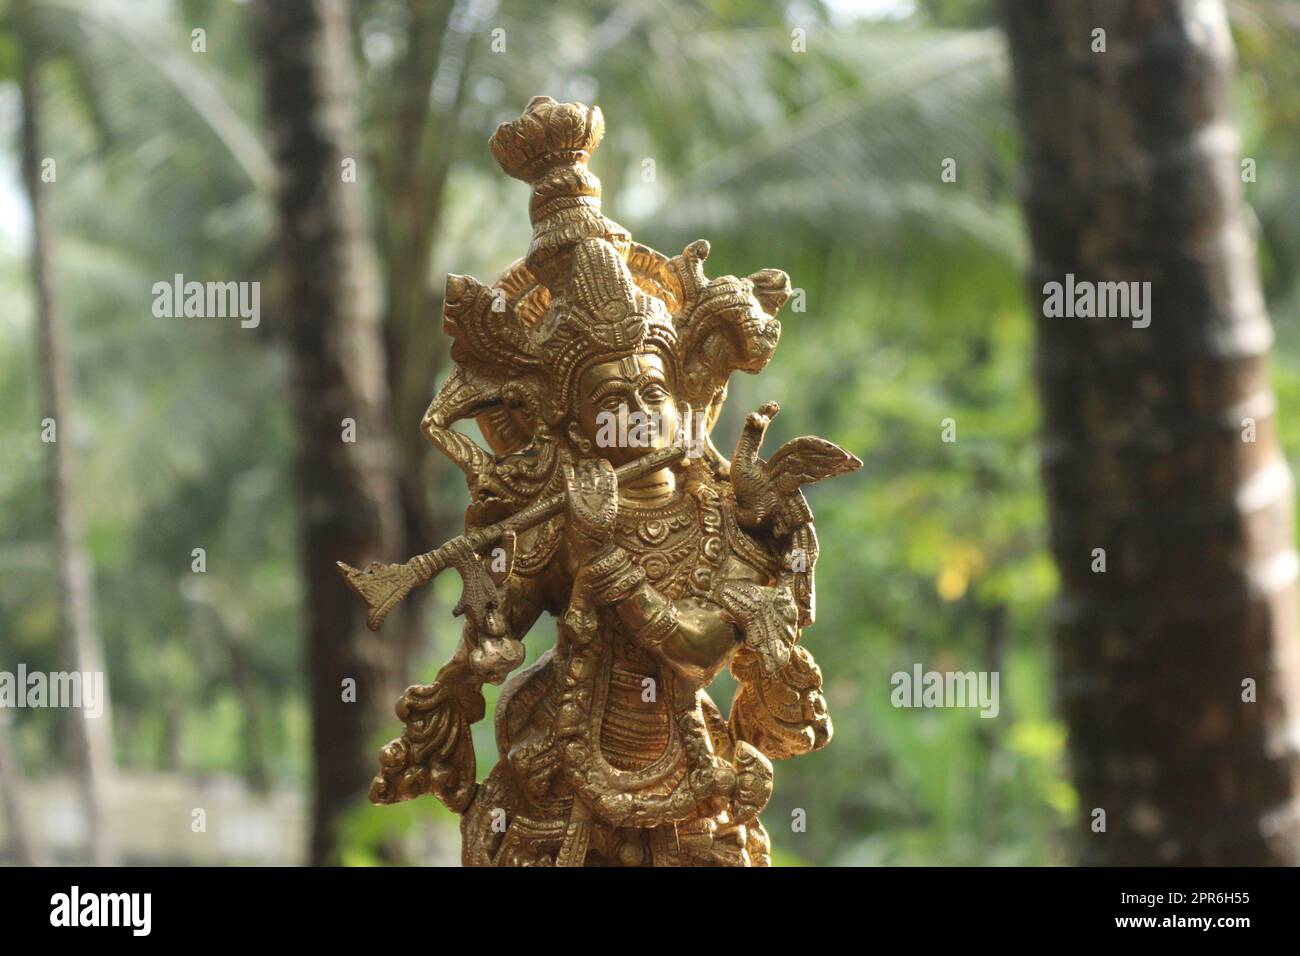 Lord krishna, ein Idol aus Messing in goldener Farbe Stockfoto